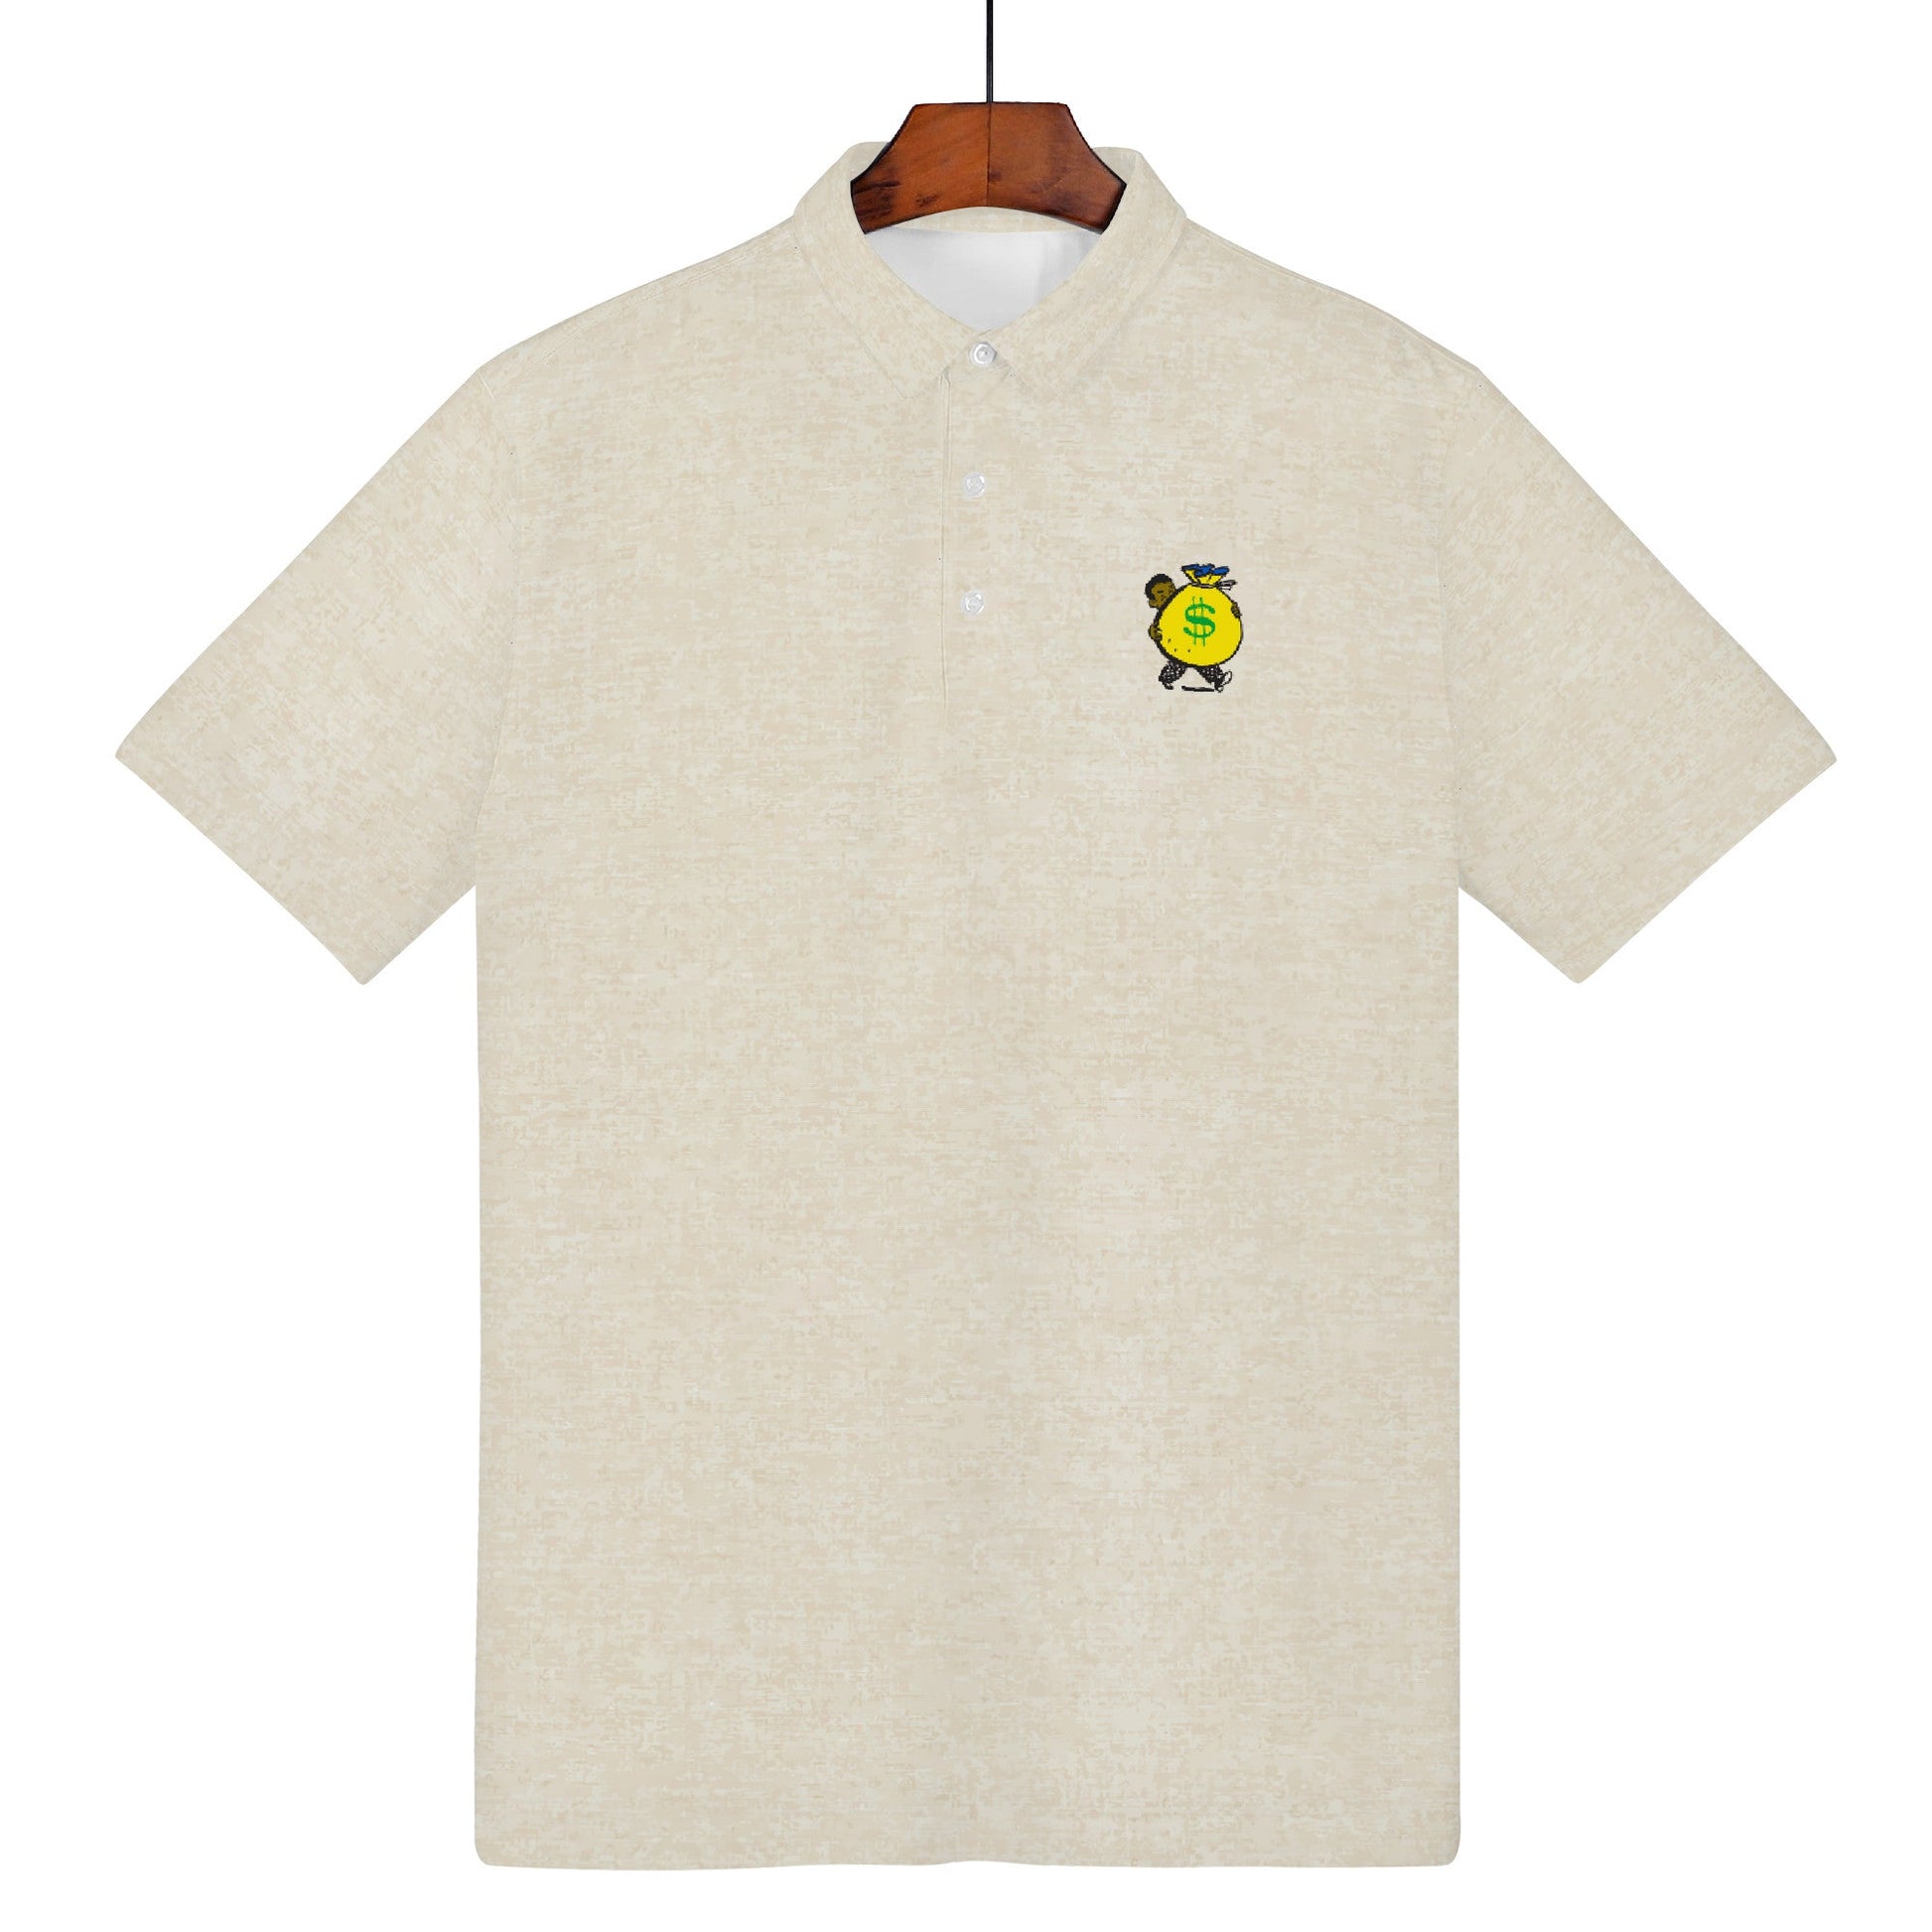 Mr. MONEY BAGS Polo Shirt | CANAANWEAR | Shirts | polo shirt